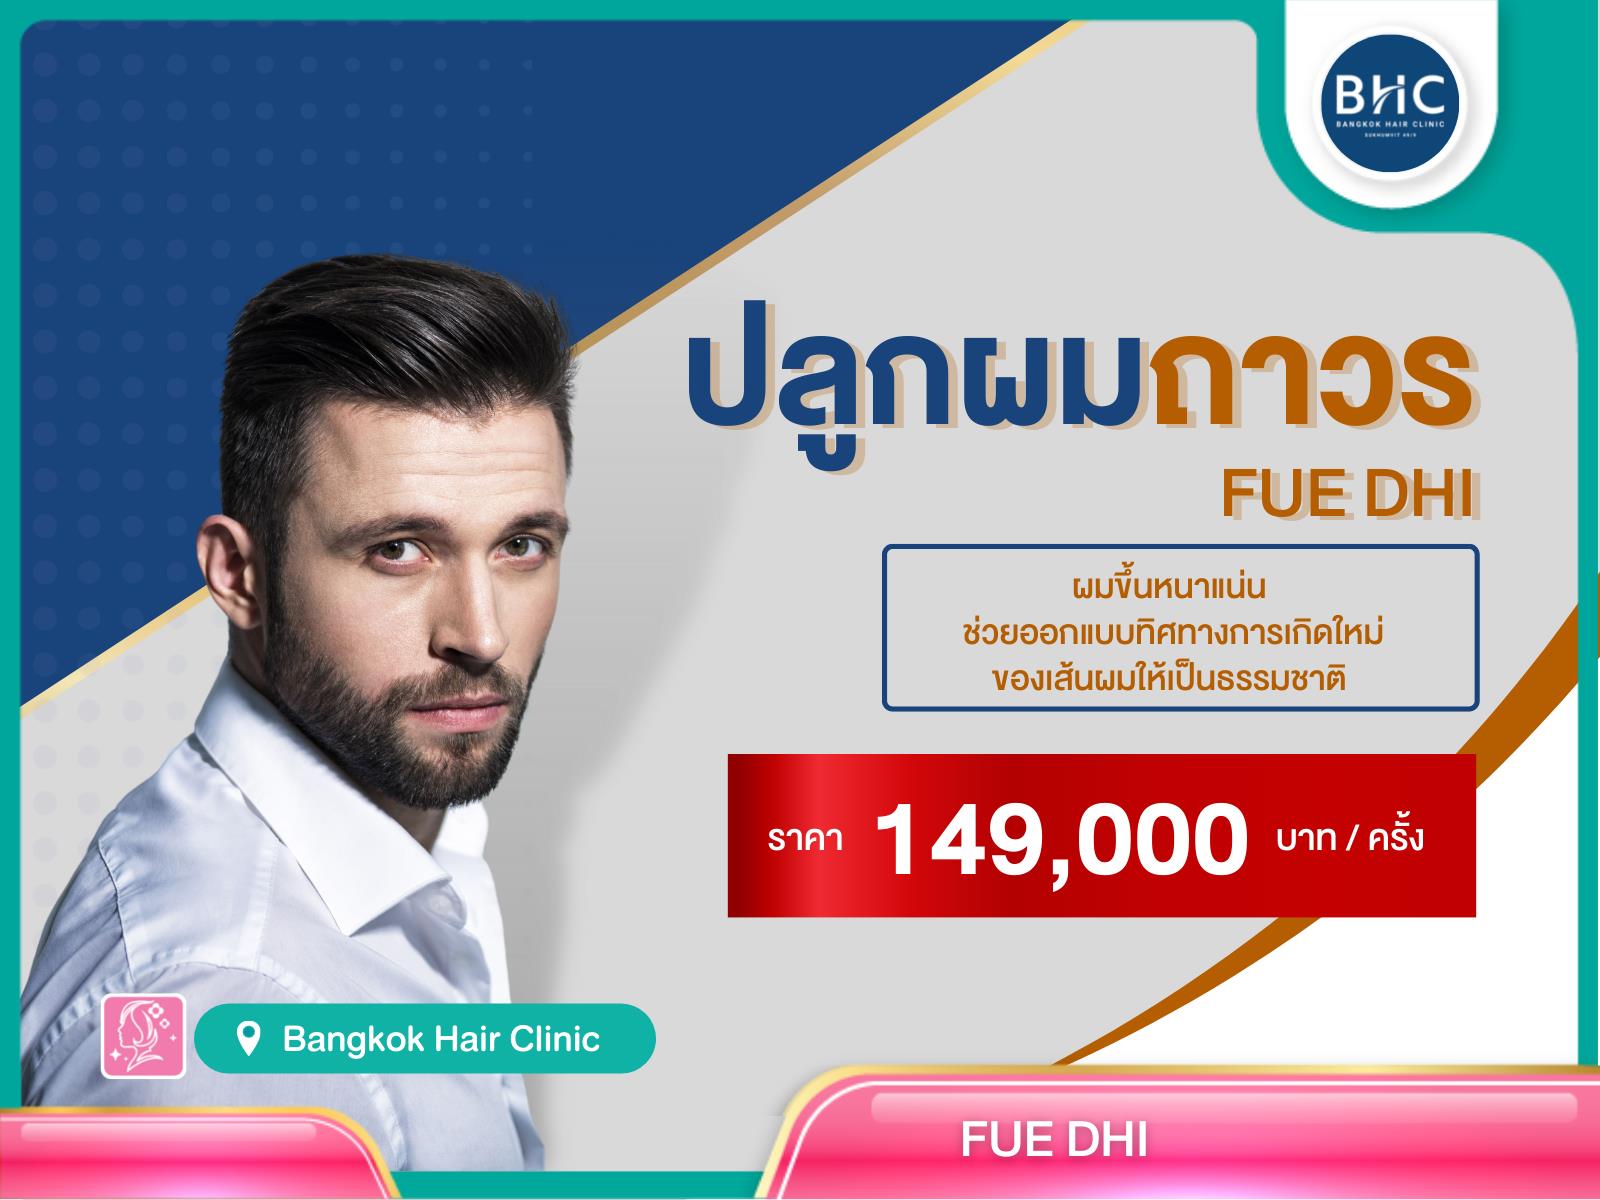 FUE DHI Hair Transplant - Bangkok Hair Clinic Health Care Booking Service |  Thailand